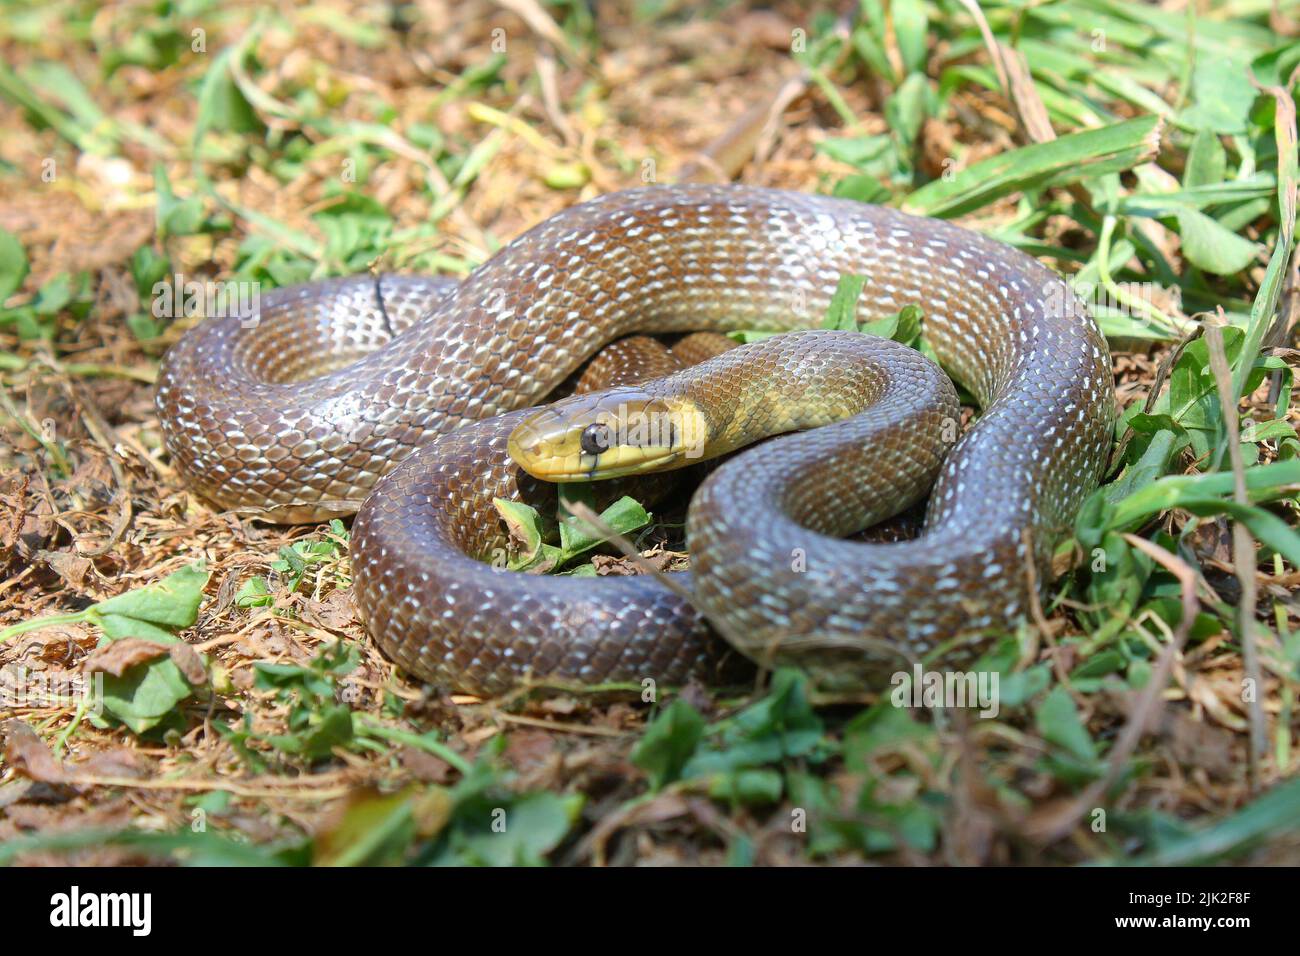 Aesculapian snake (Zamenis longissimus) in natural habitat Stock Photo